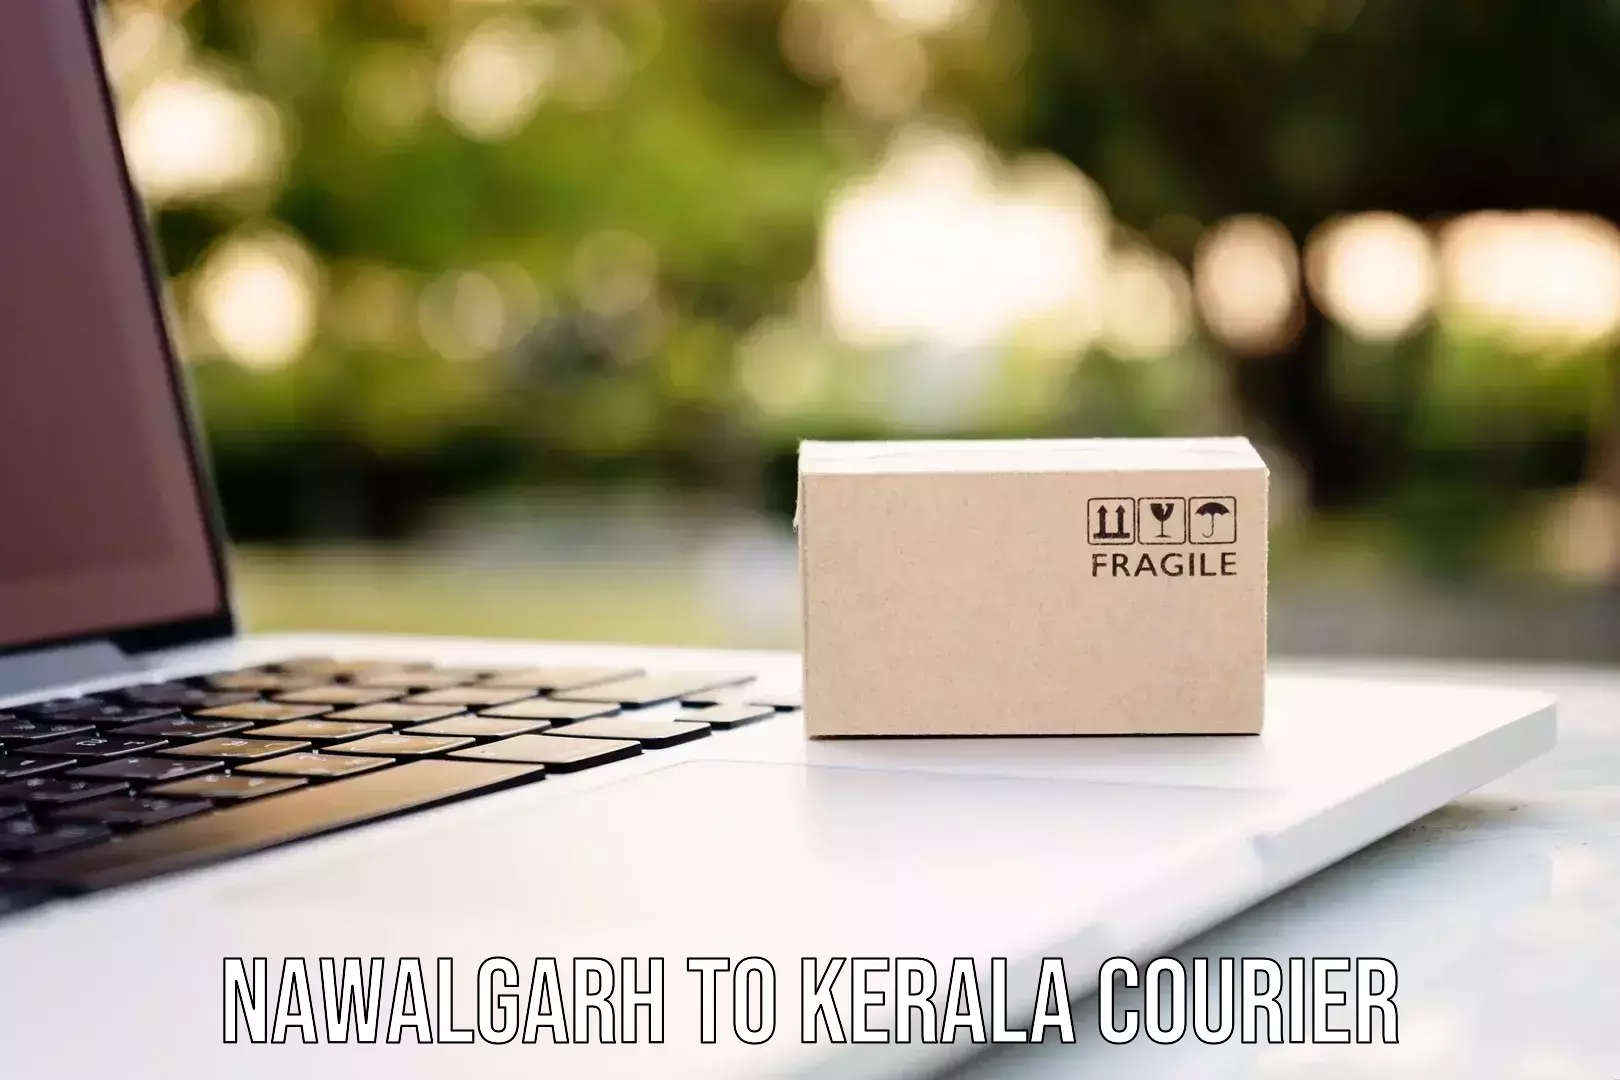 Premium courier solutions Nawalgarh to Kerala